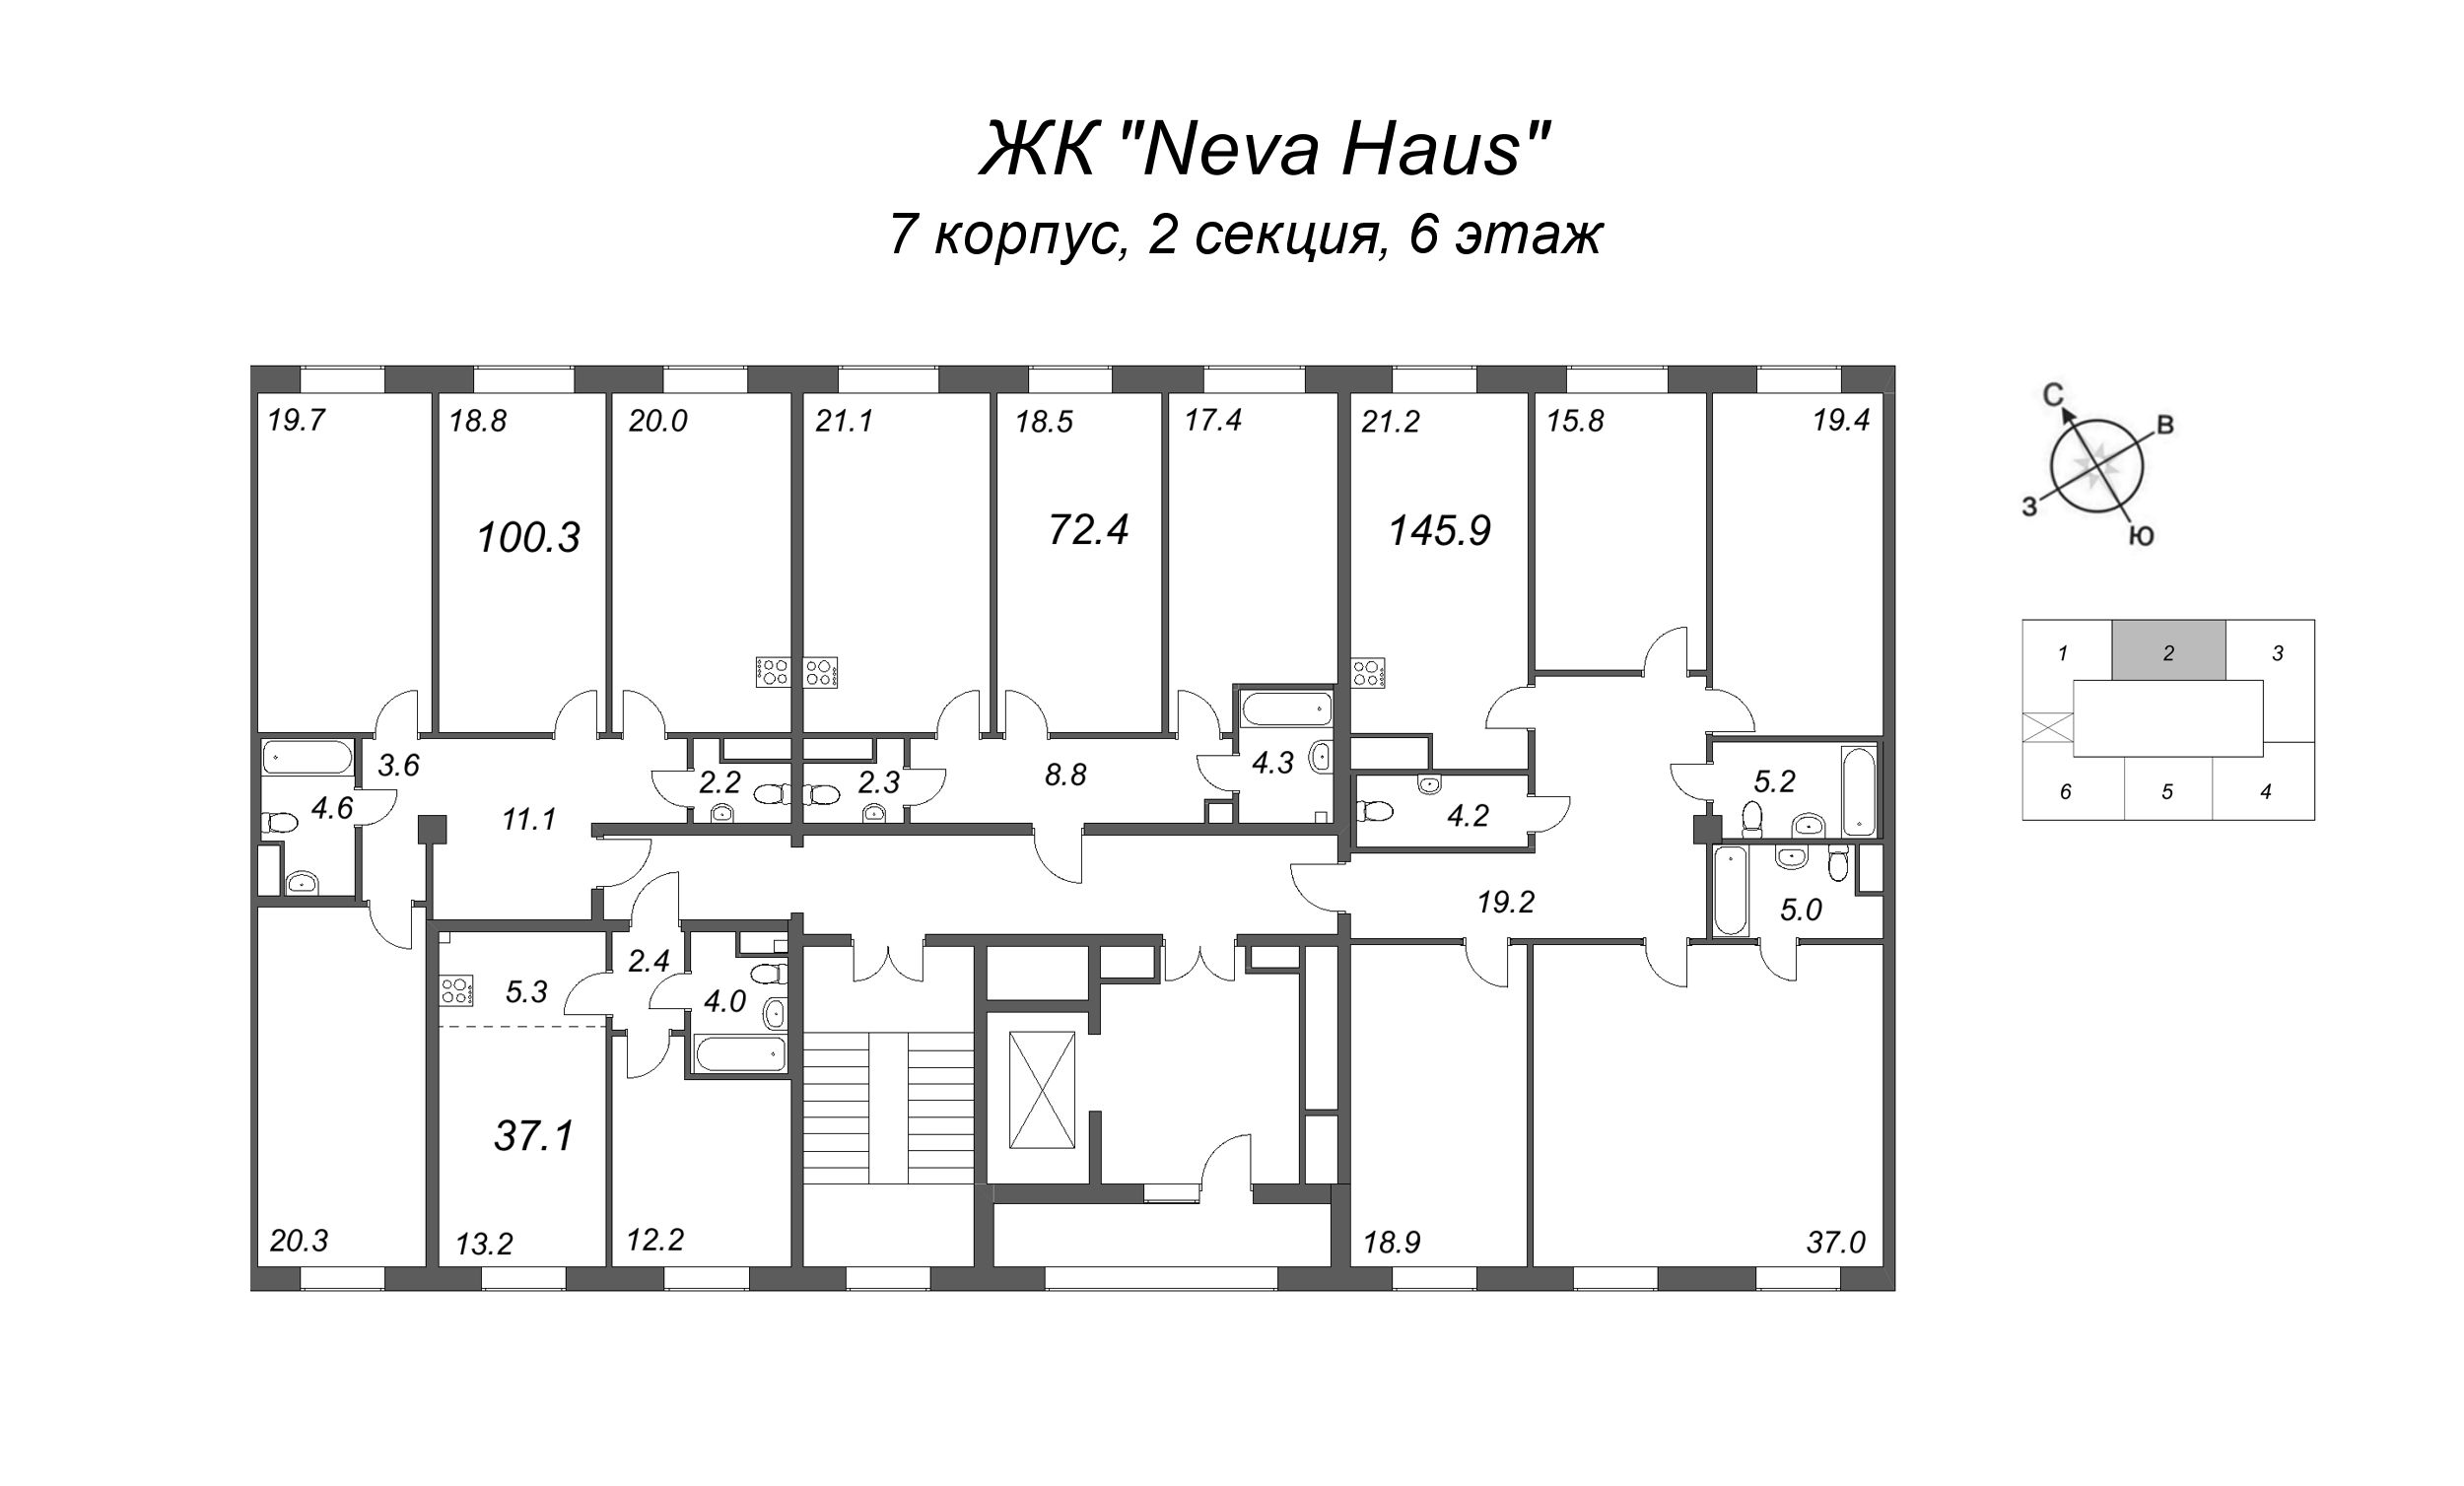 4-комнатная (Евро) квартира, 101.1 м² - планировка этажа